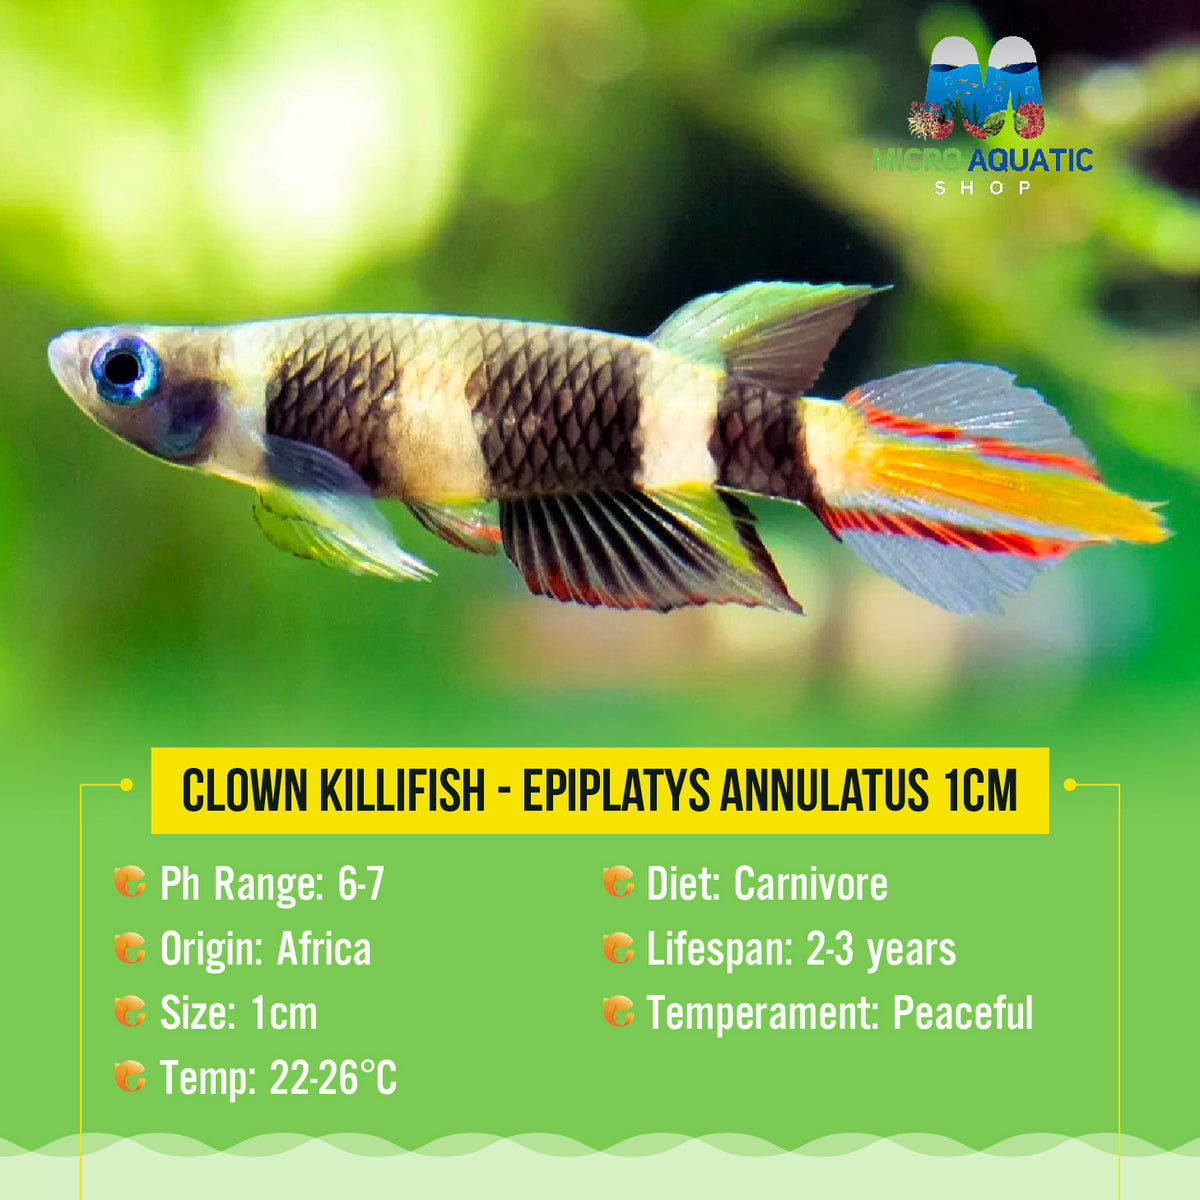 Clown Killifish - Epiplatys annulatus 1cm